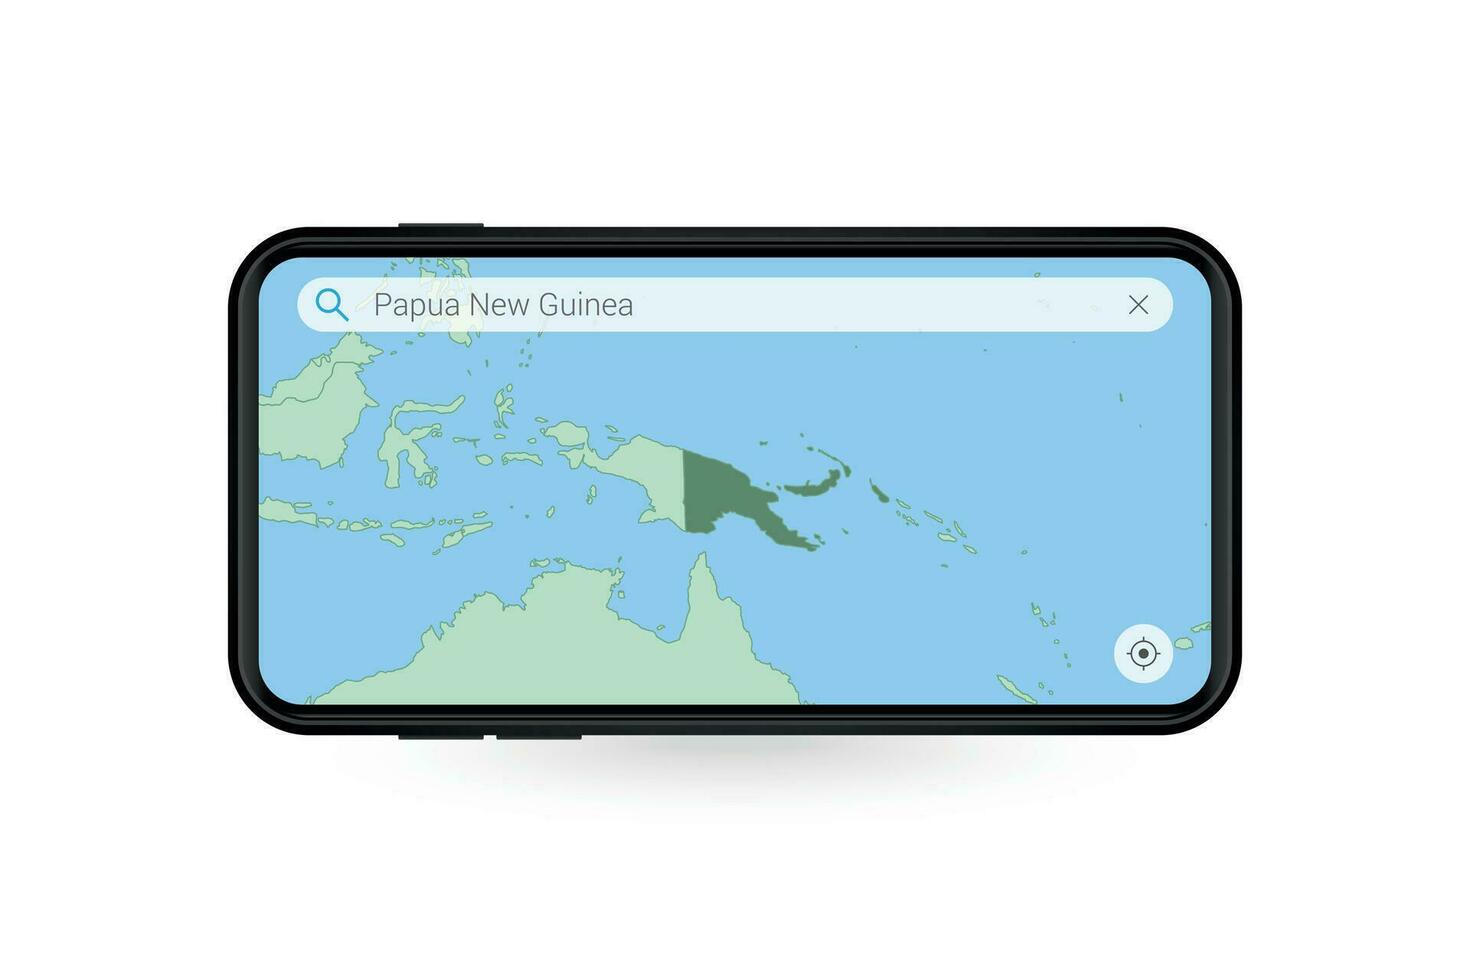 ricerca carta geografica di papua nuovo Guinea nel smartphone carta geografica applicazione. carta geografica di papua nuovo Guinea nel cellula Telefono. vettore